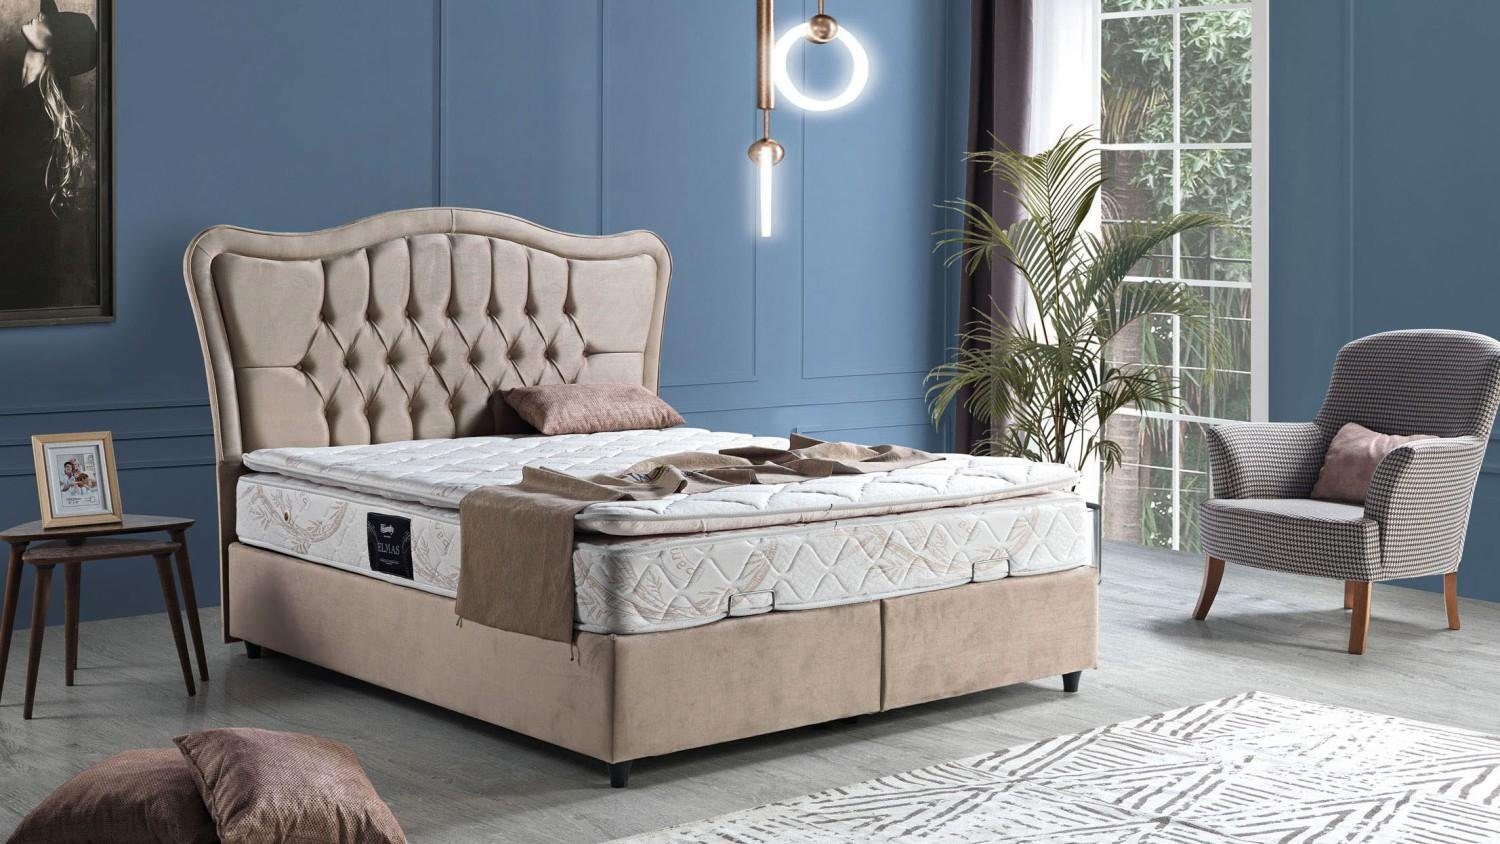 [Explosive Popularität] JVmoebel Bett Bett Betten Europe Möbel Luxus Beige Schlafzimmer In Polster Modern Design (Bett), Made